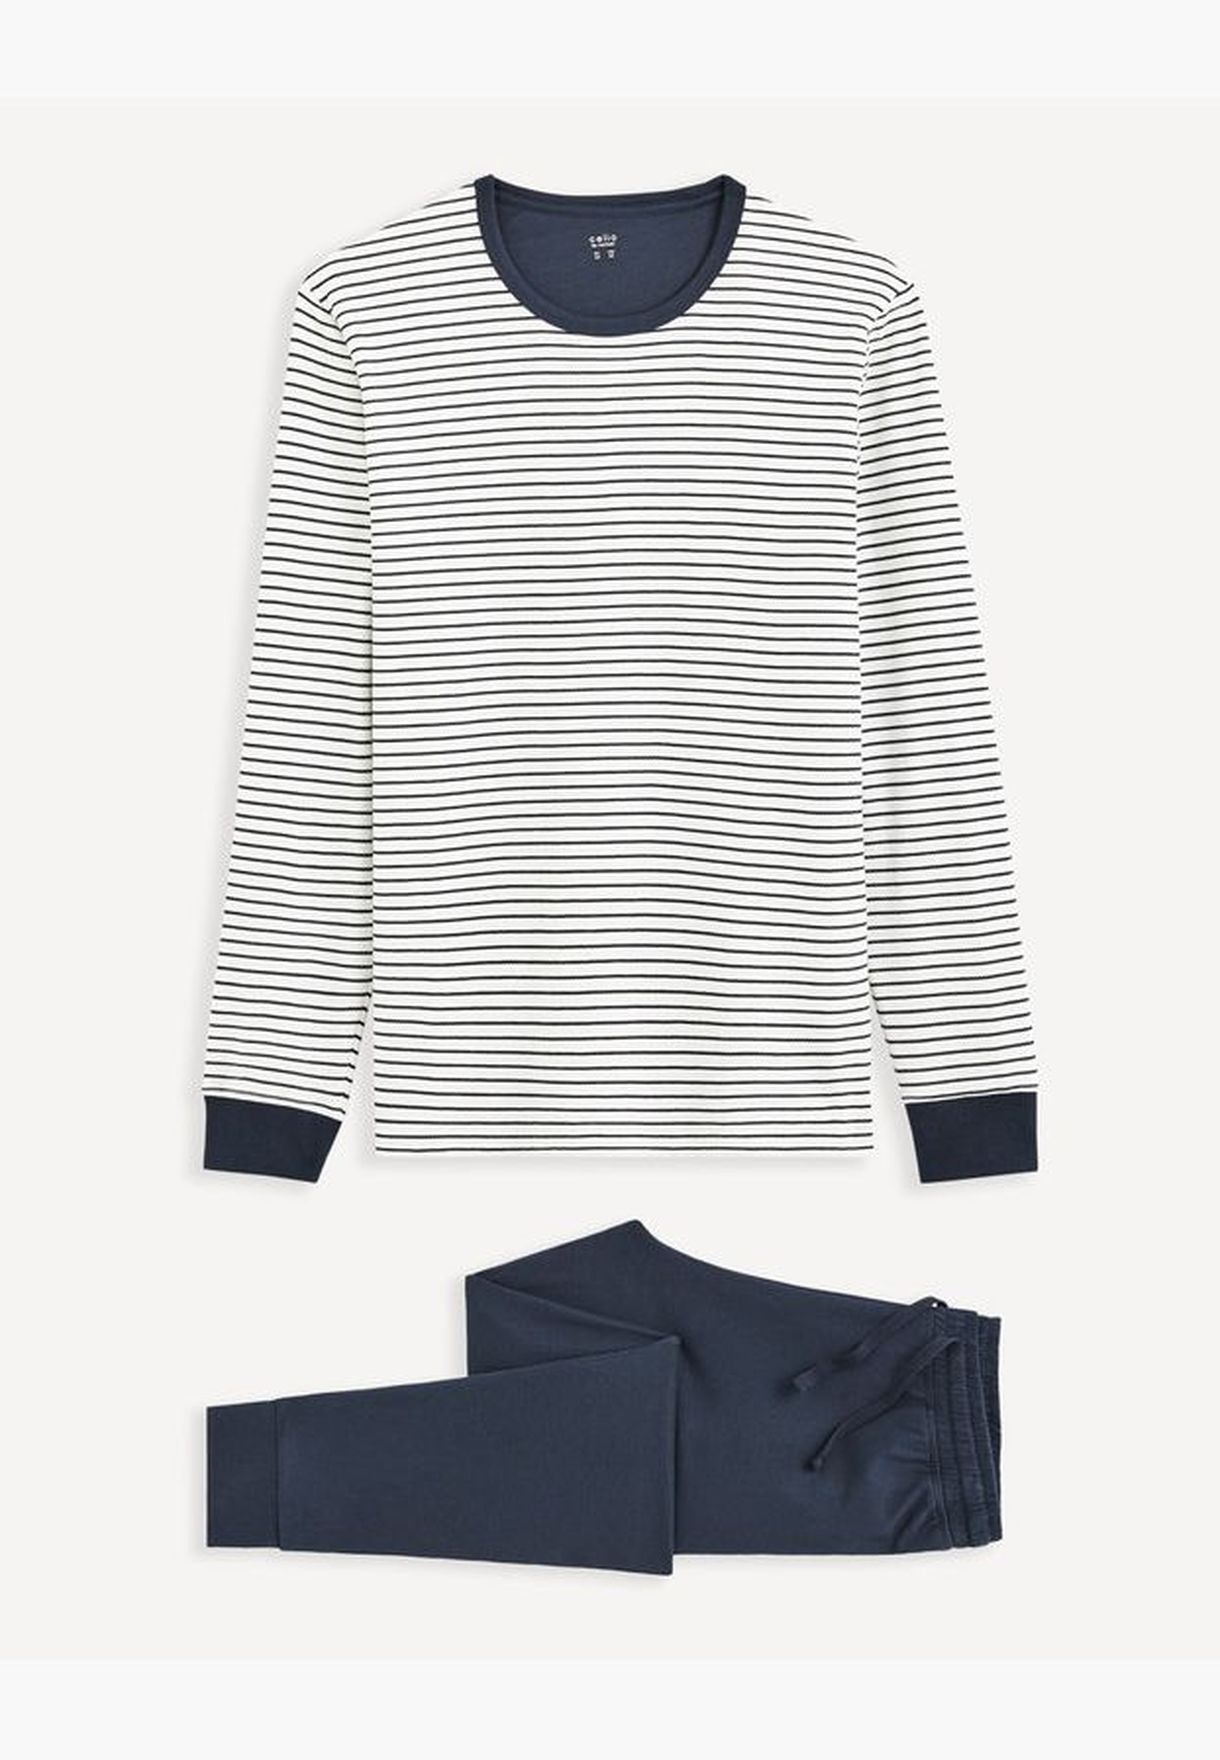 Celio Nightwear Shirt - Navy